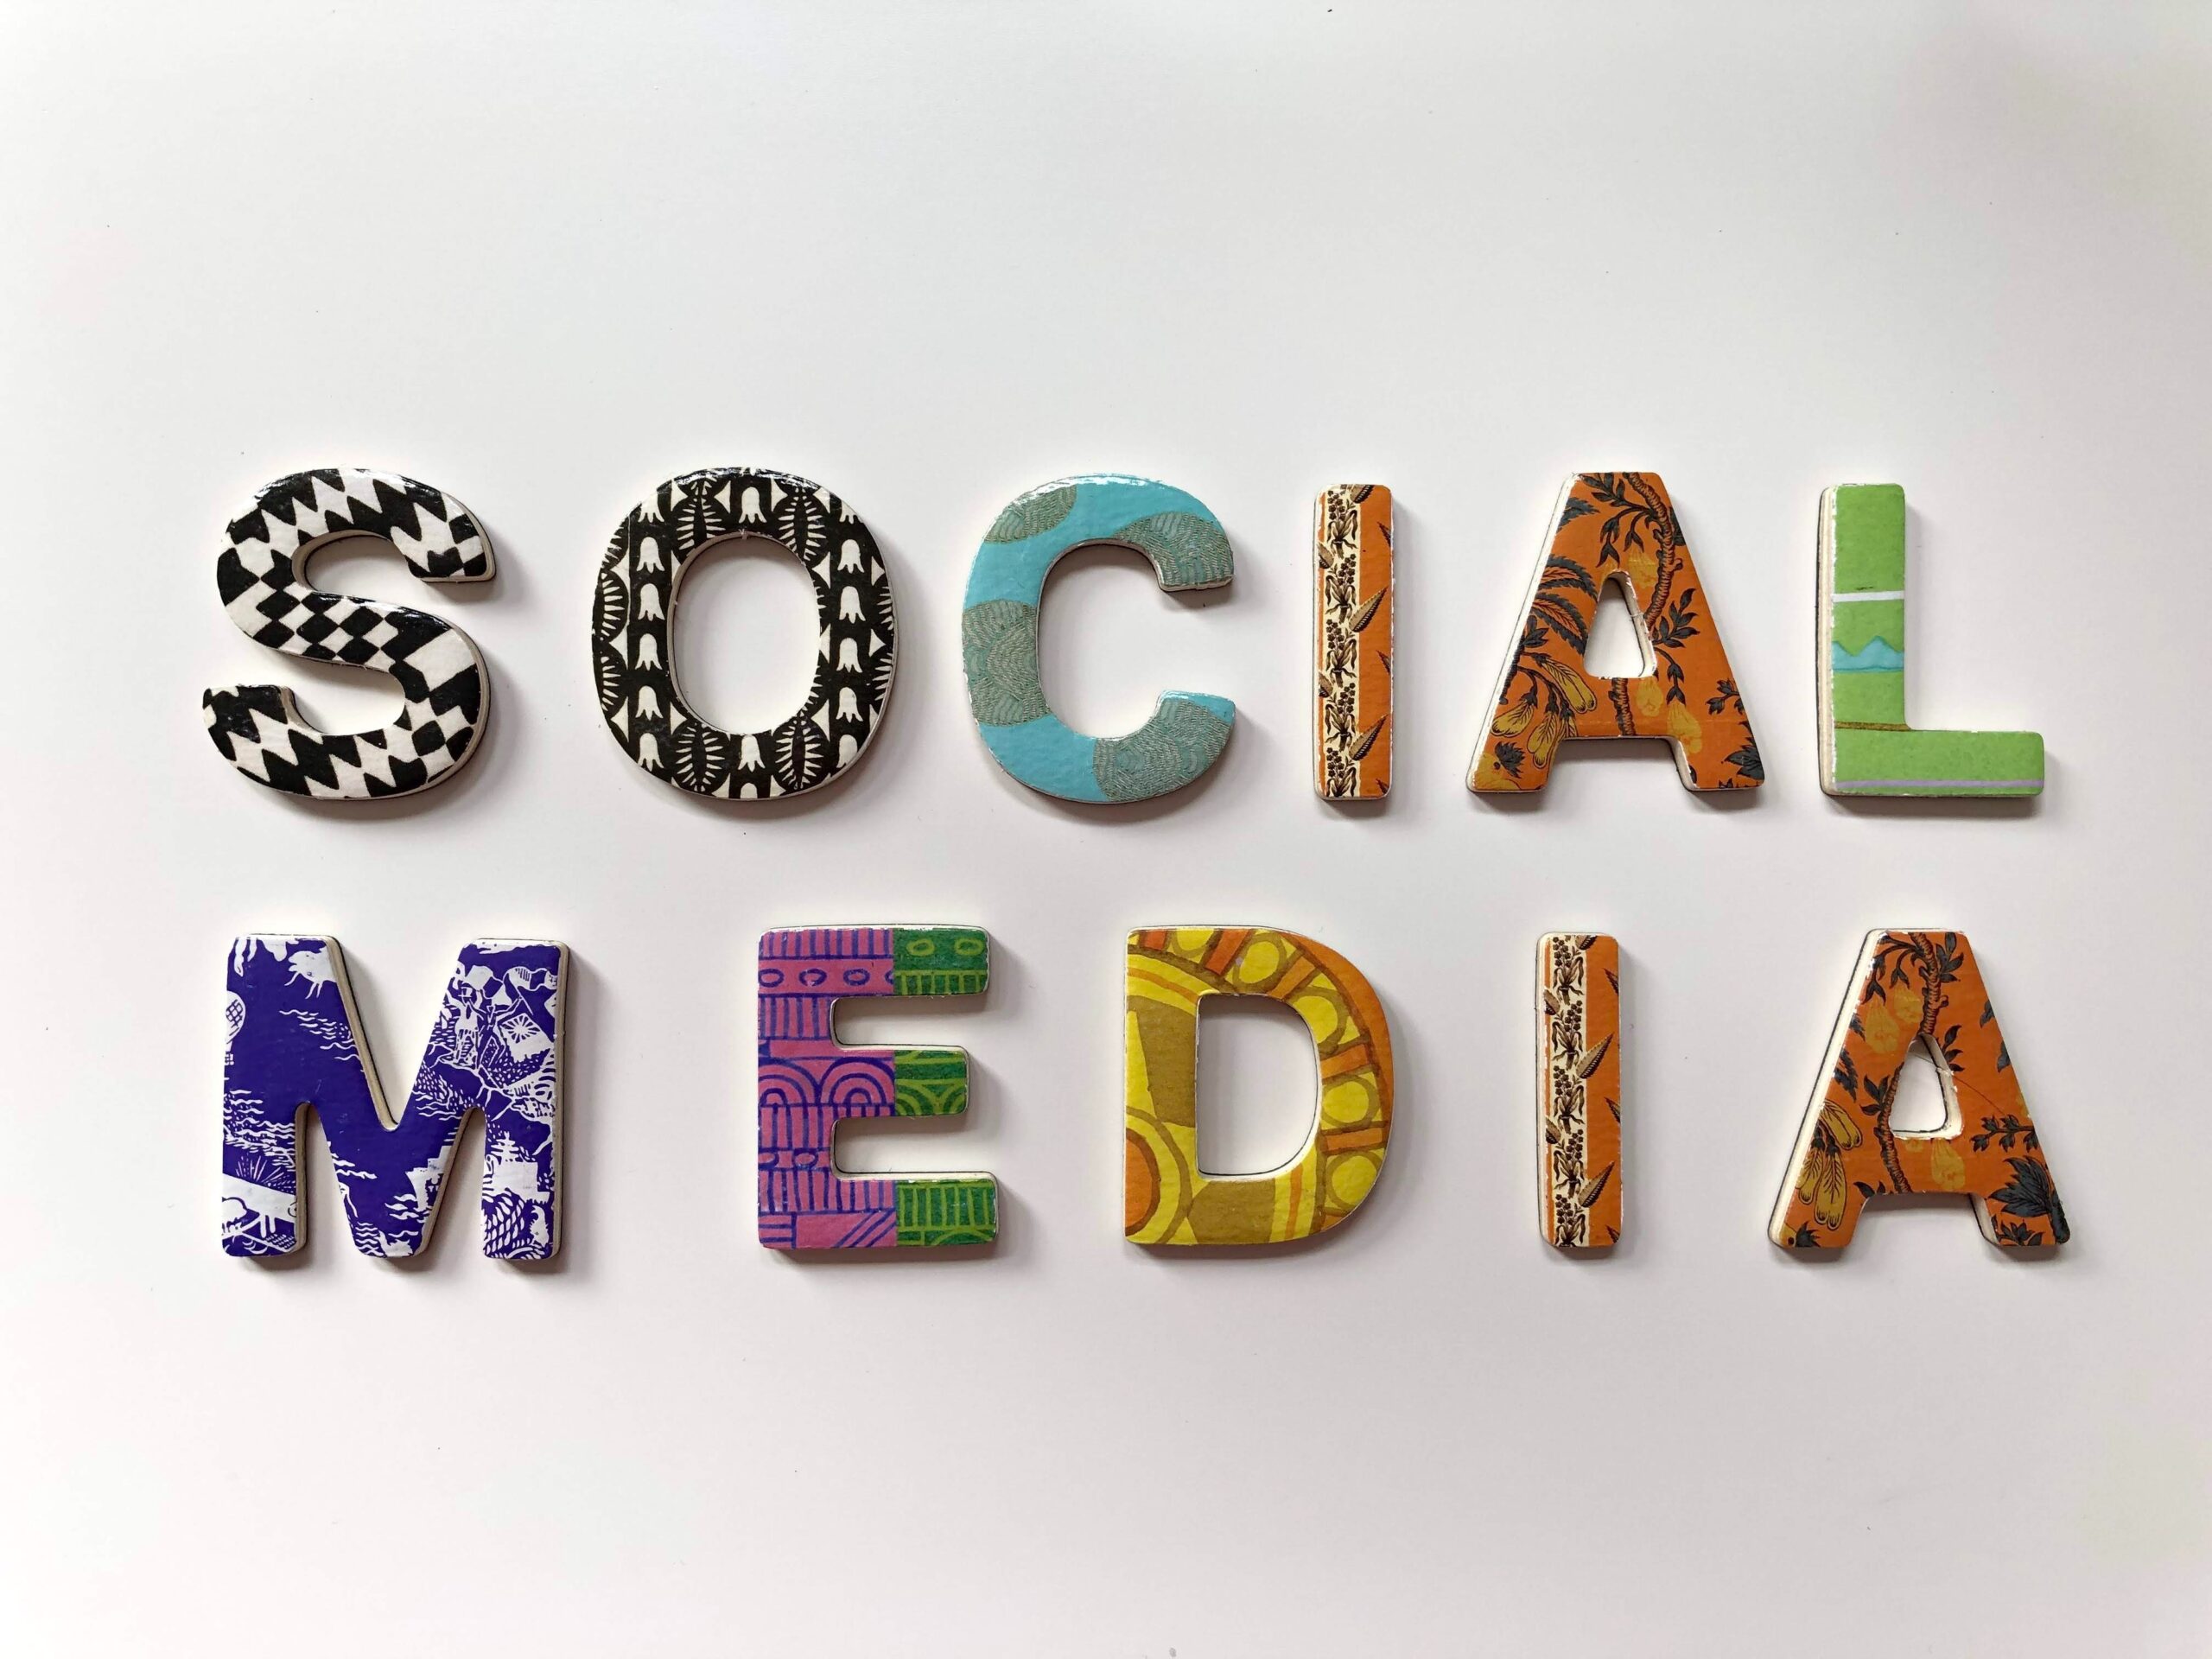 What's an Effective Social Media Marketing Plan